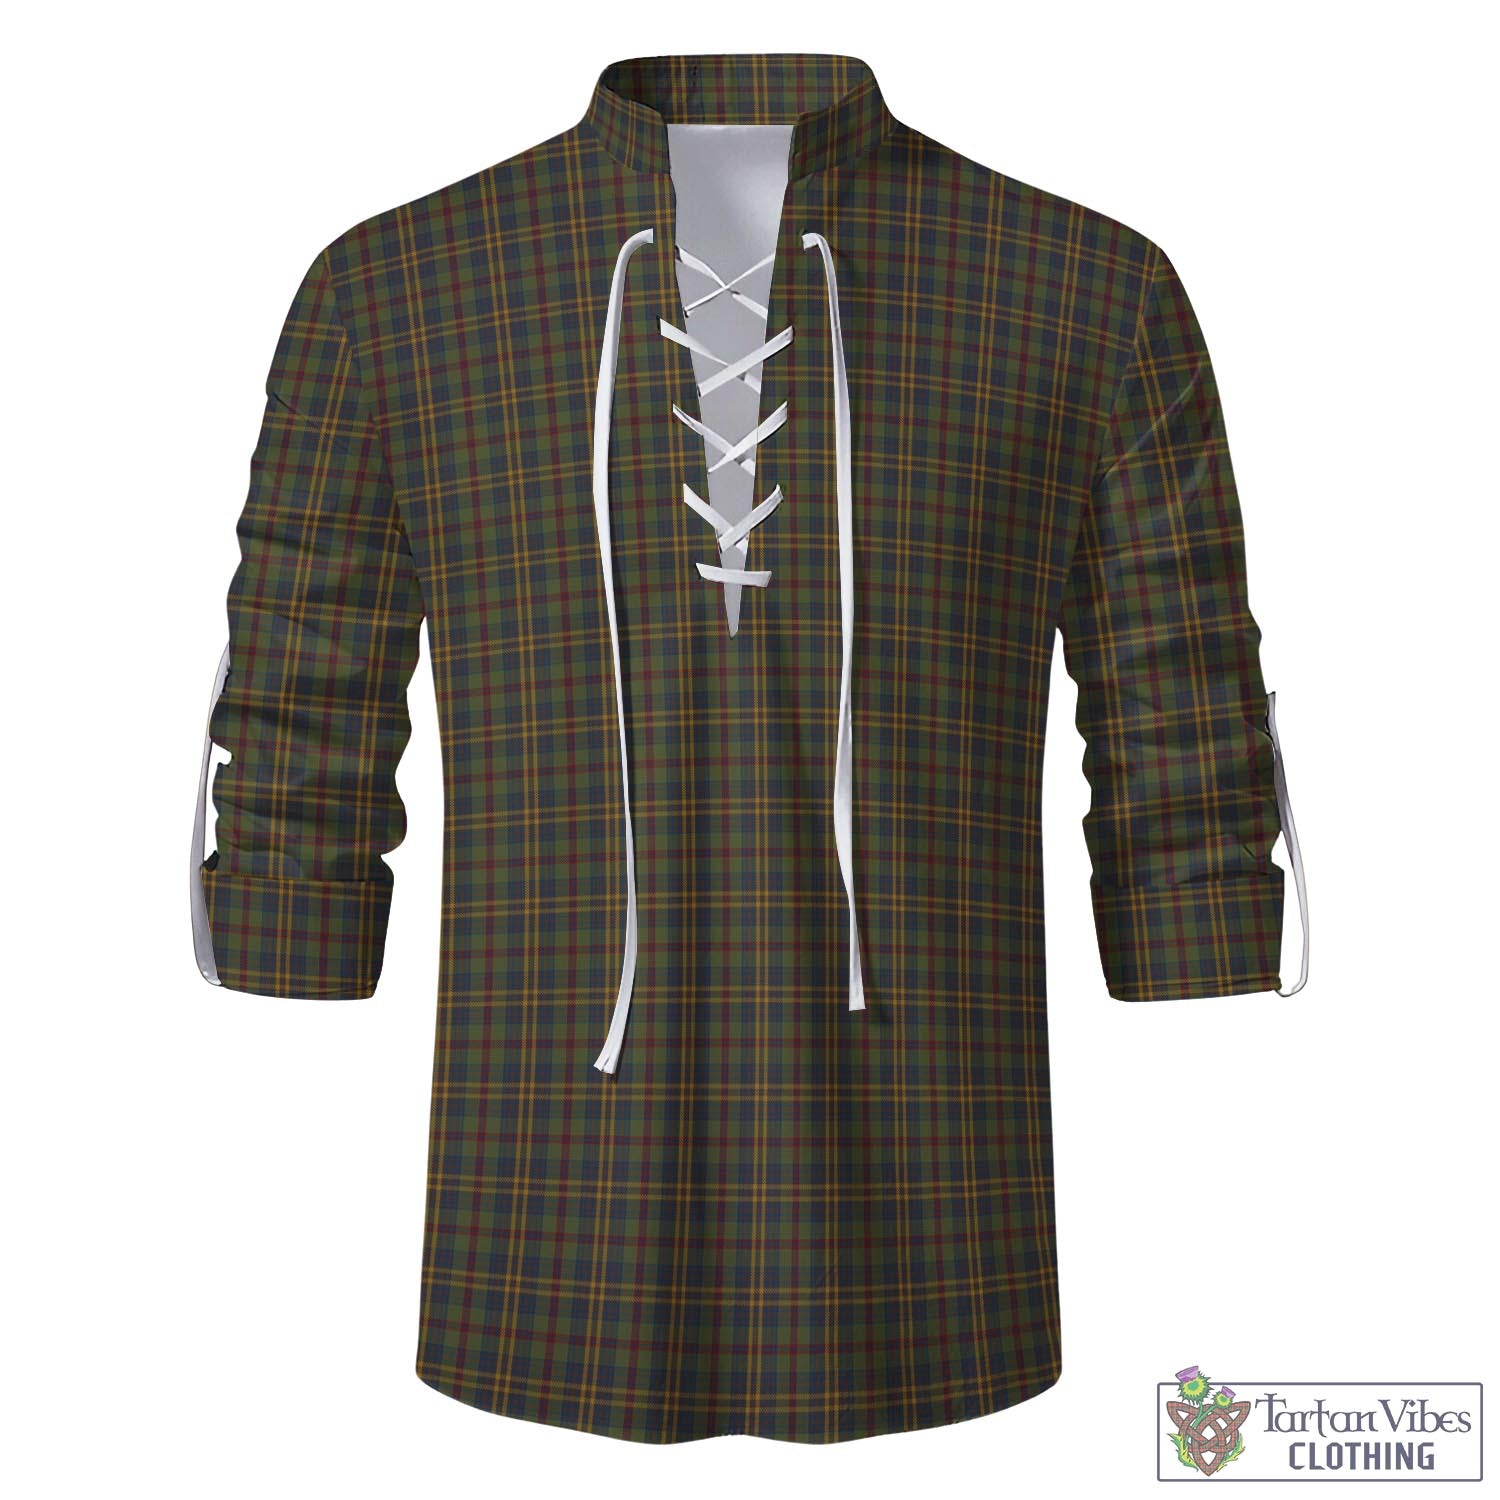 Tartan Vibes Clothing Limerick County Ireland Tartan Men's Scottish Traditional Jacobite Ghillie Kilt Shirt